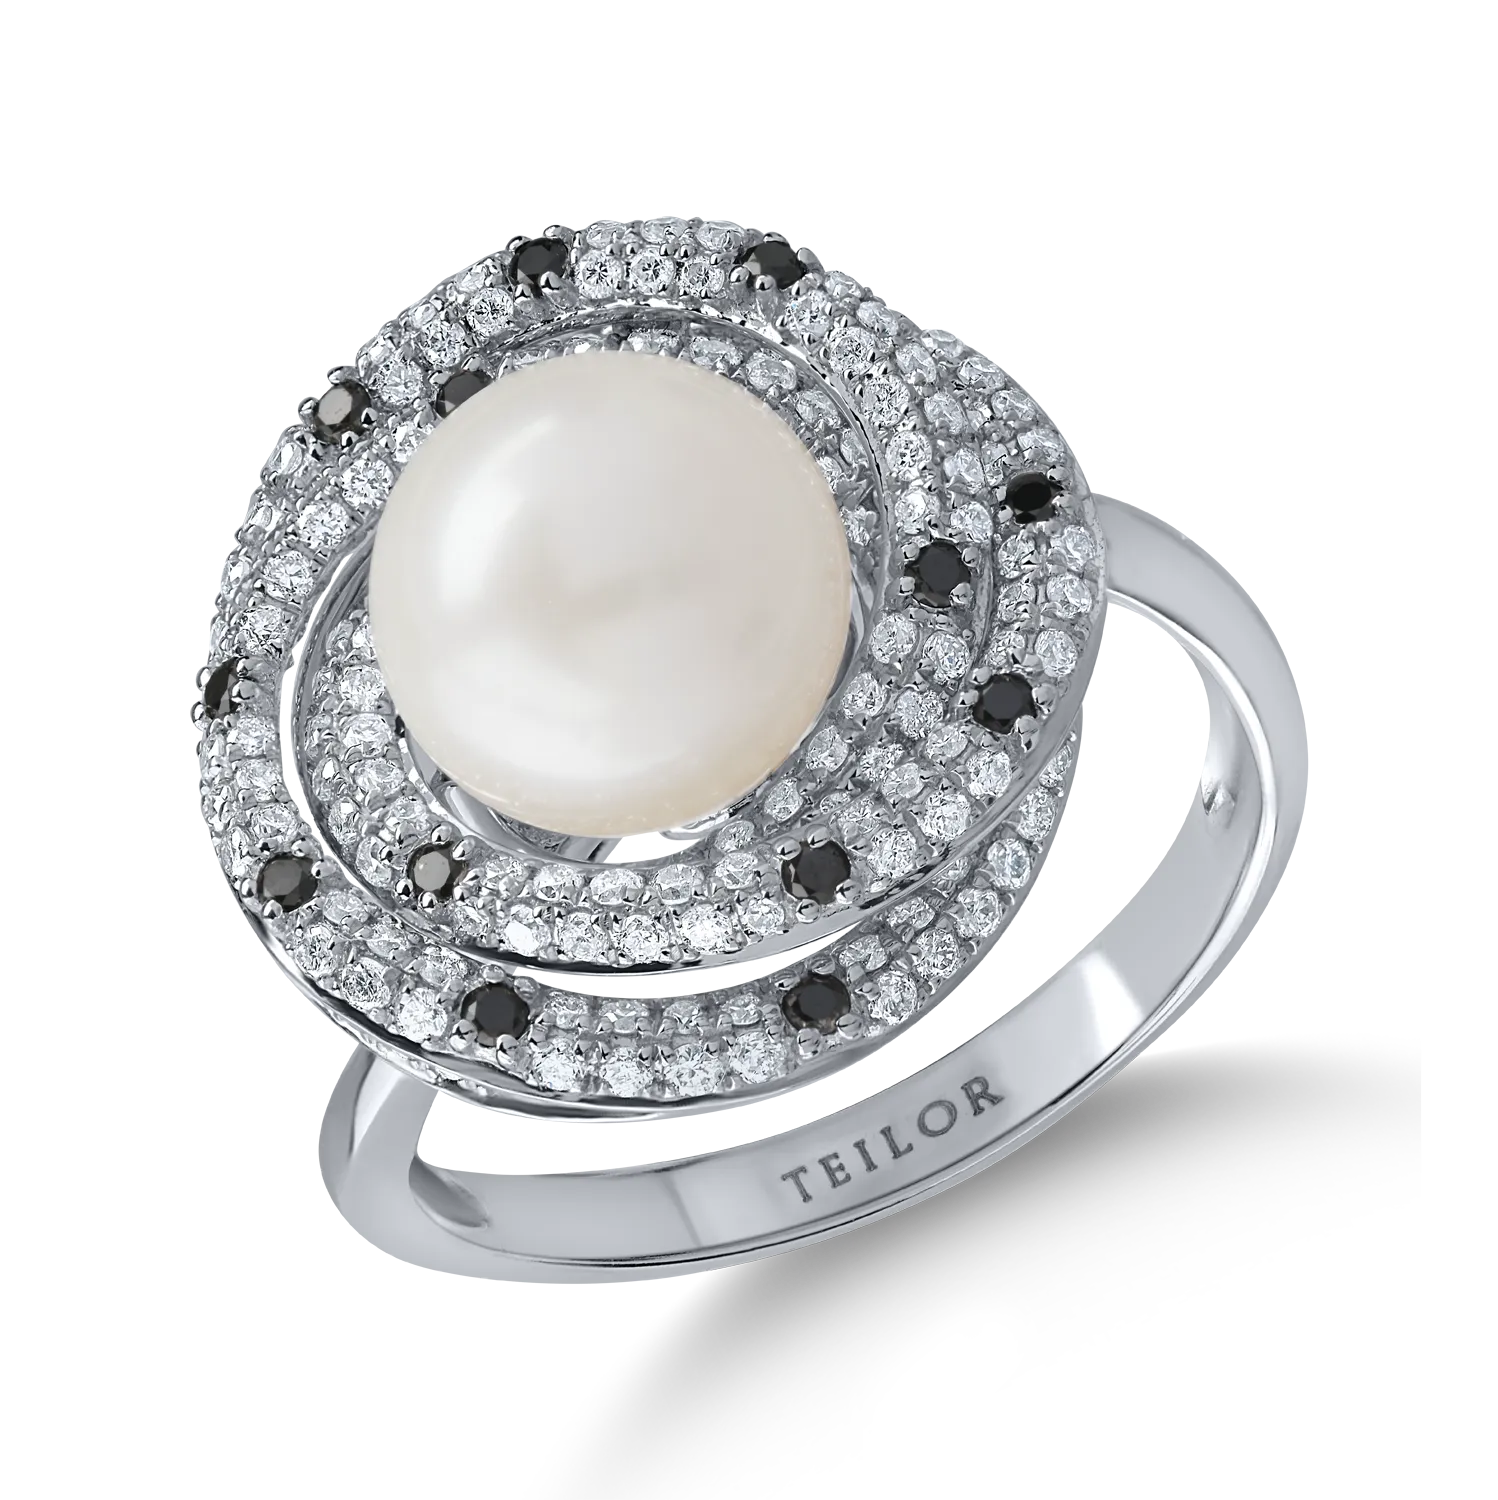 Inel din aur alb cu perla de cultura de 5.2ct si diamante de 0.7ct